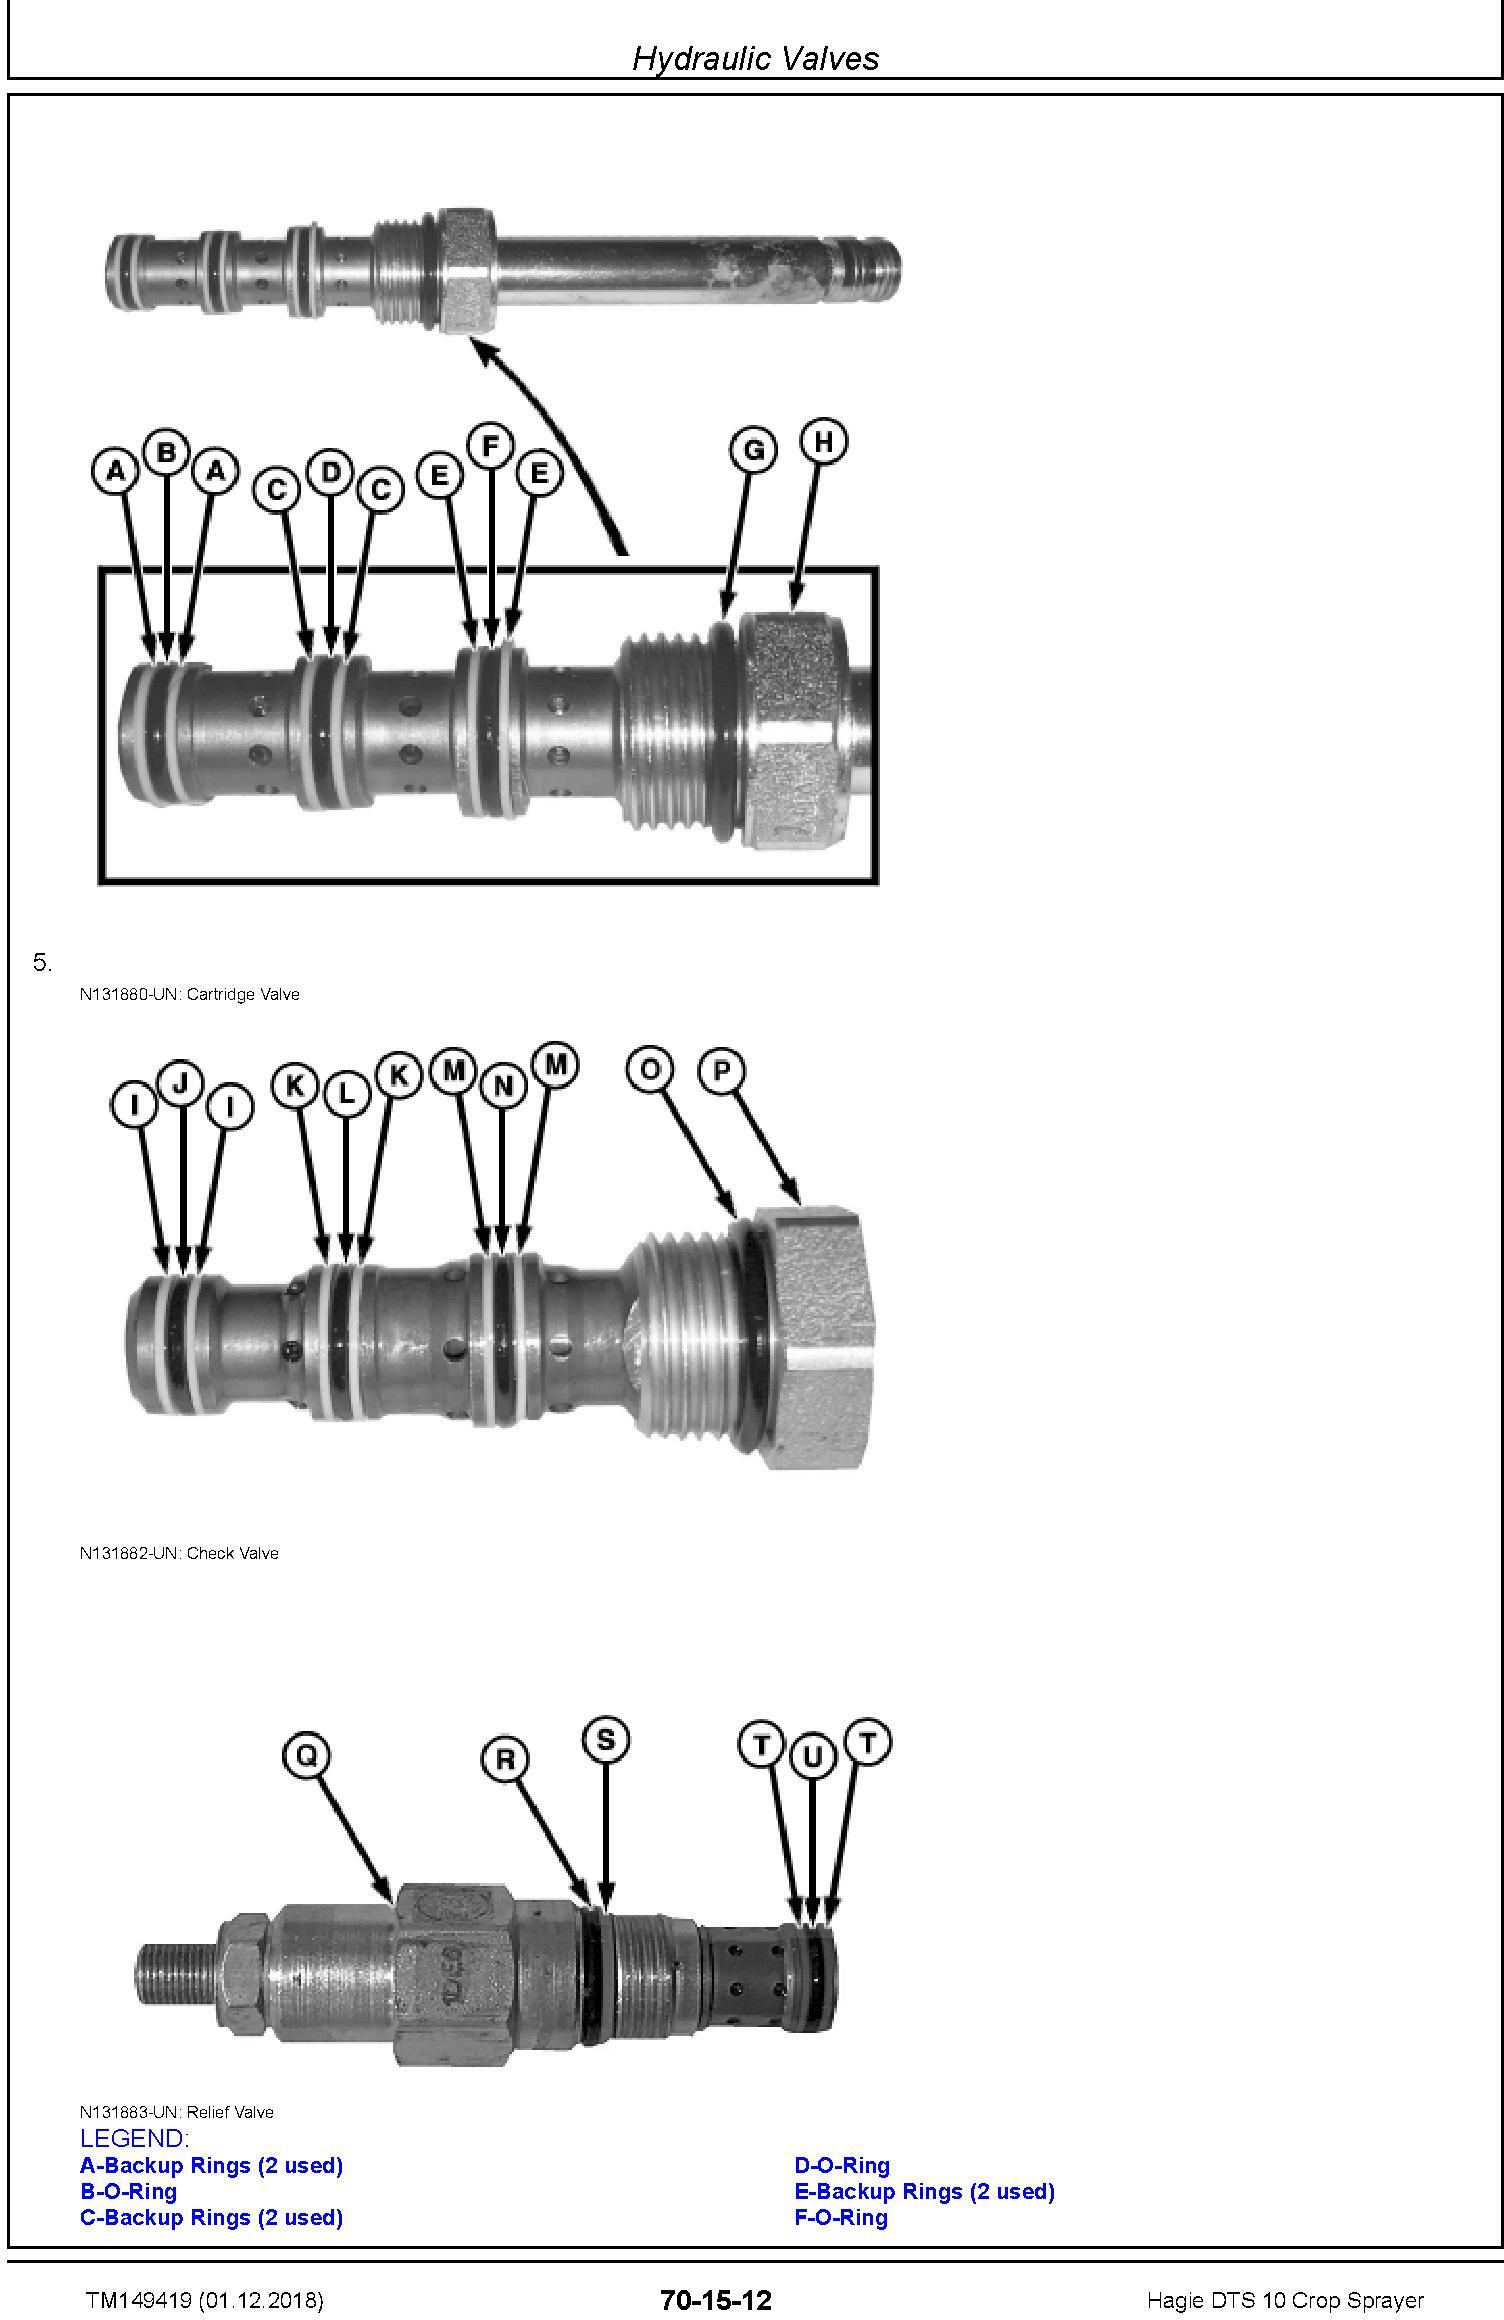 Hagie DTS 10 Crop Sprayer Repair Technical Manual (TM149419) - 2